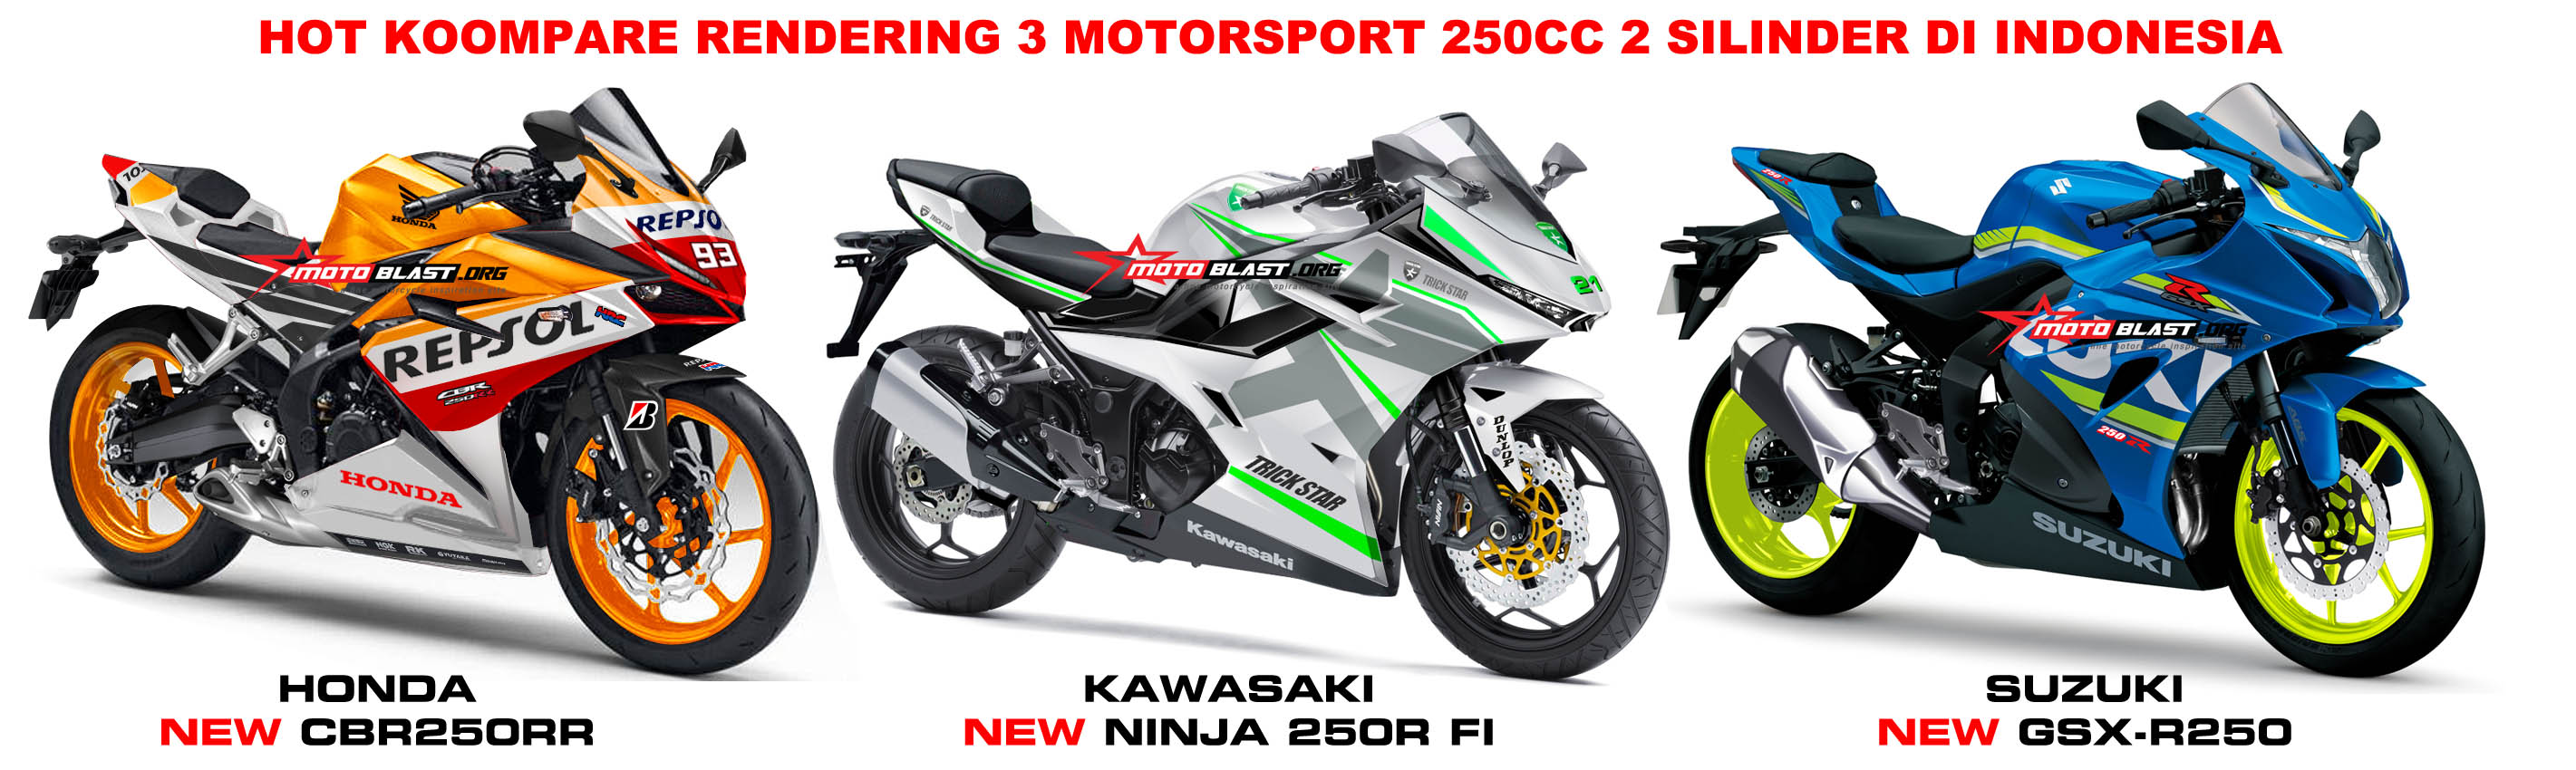 HOT Kompare Fisik 3 Motorsport 250cc Terbaru CBR250RR New